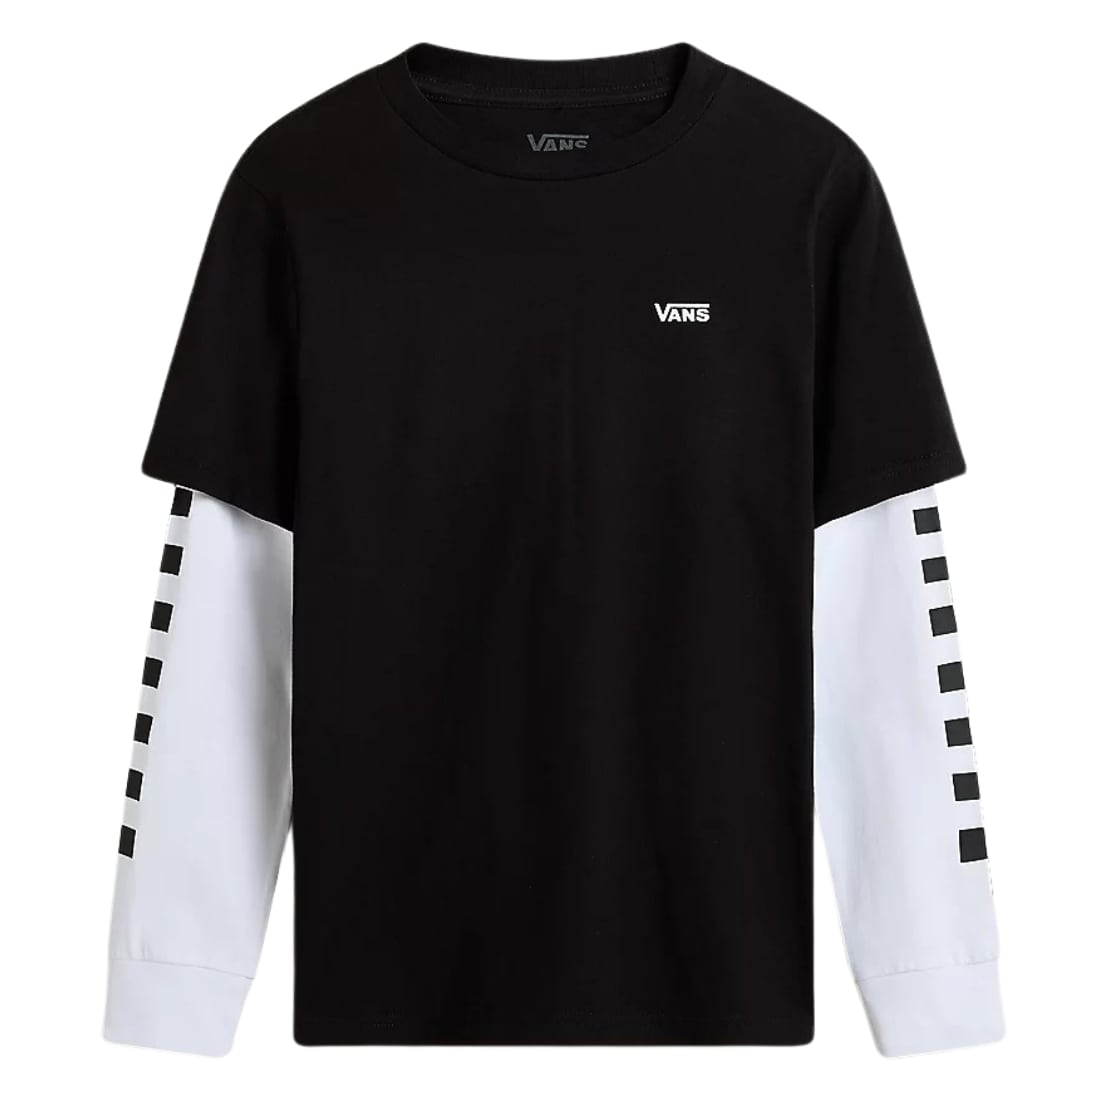 Vans Boys Long Check Twofer Long Sleeve T-Shirt - Black/Black - Boys Skate Brand T-Shirt by Vans